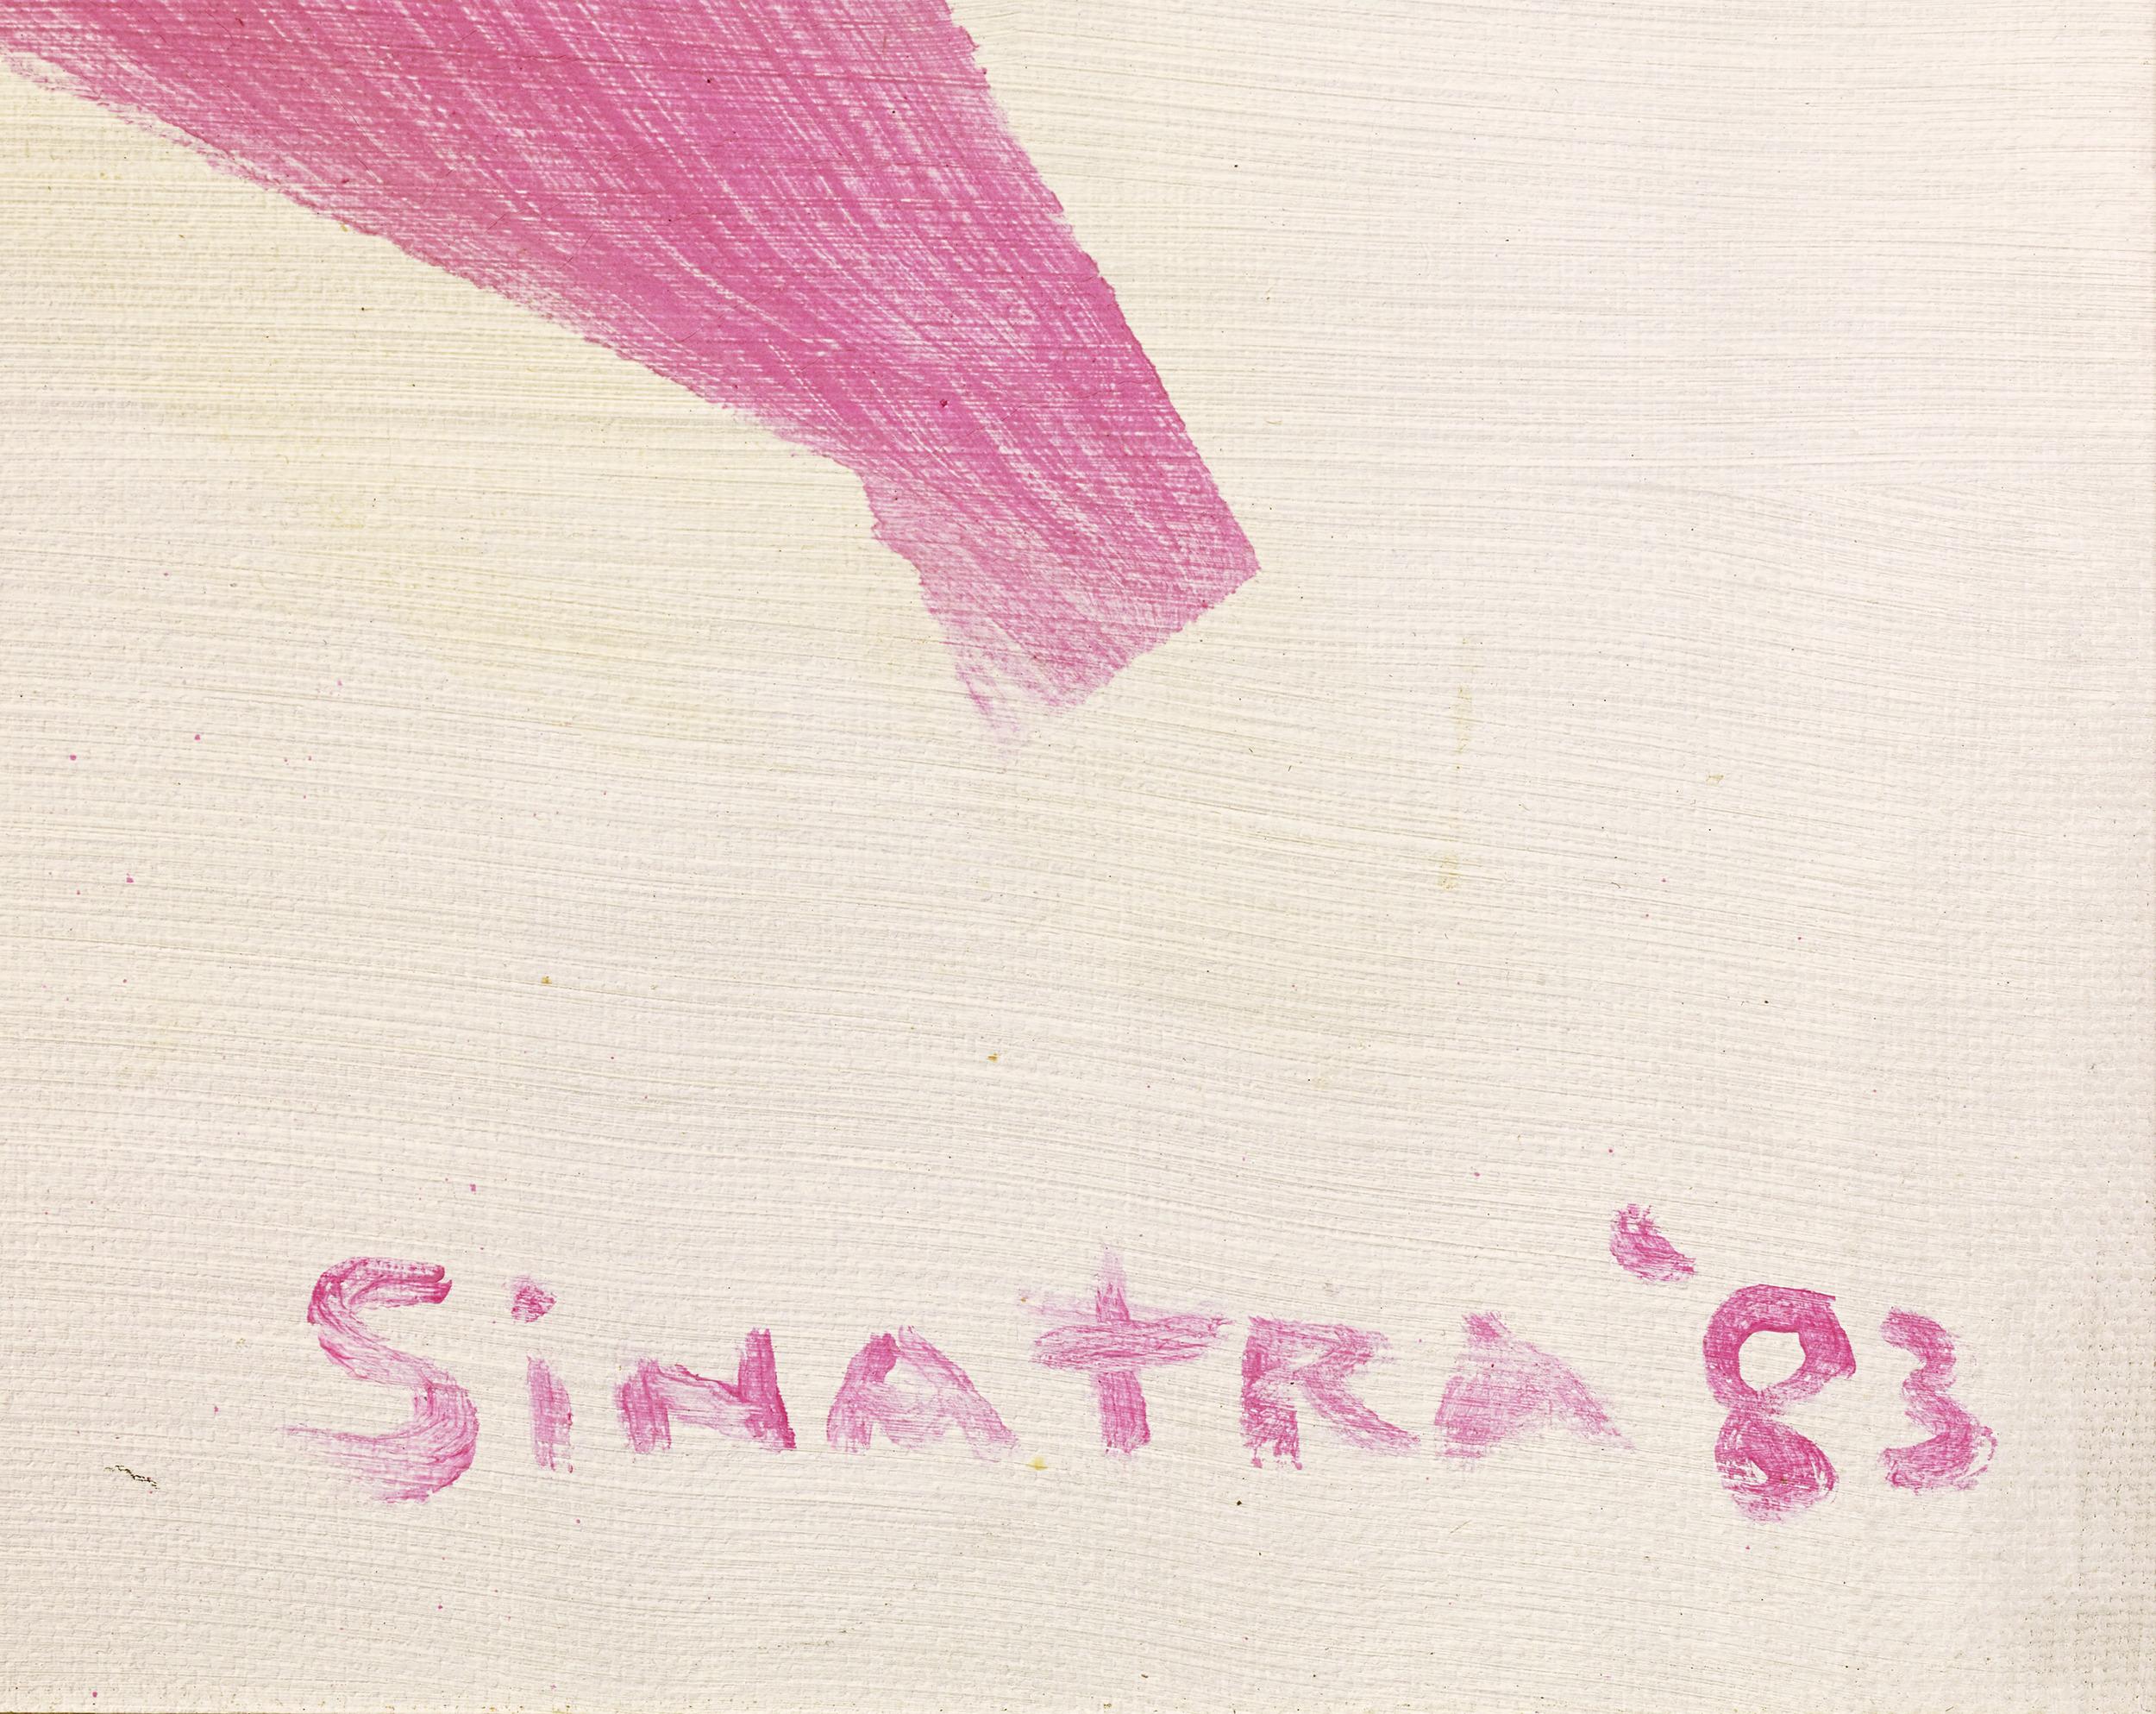 Abstrait rose, violet et blanc par Frank Sinatra 4